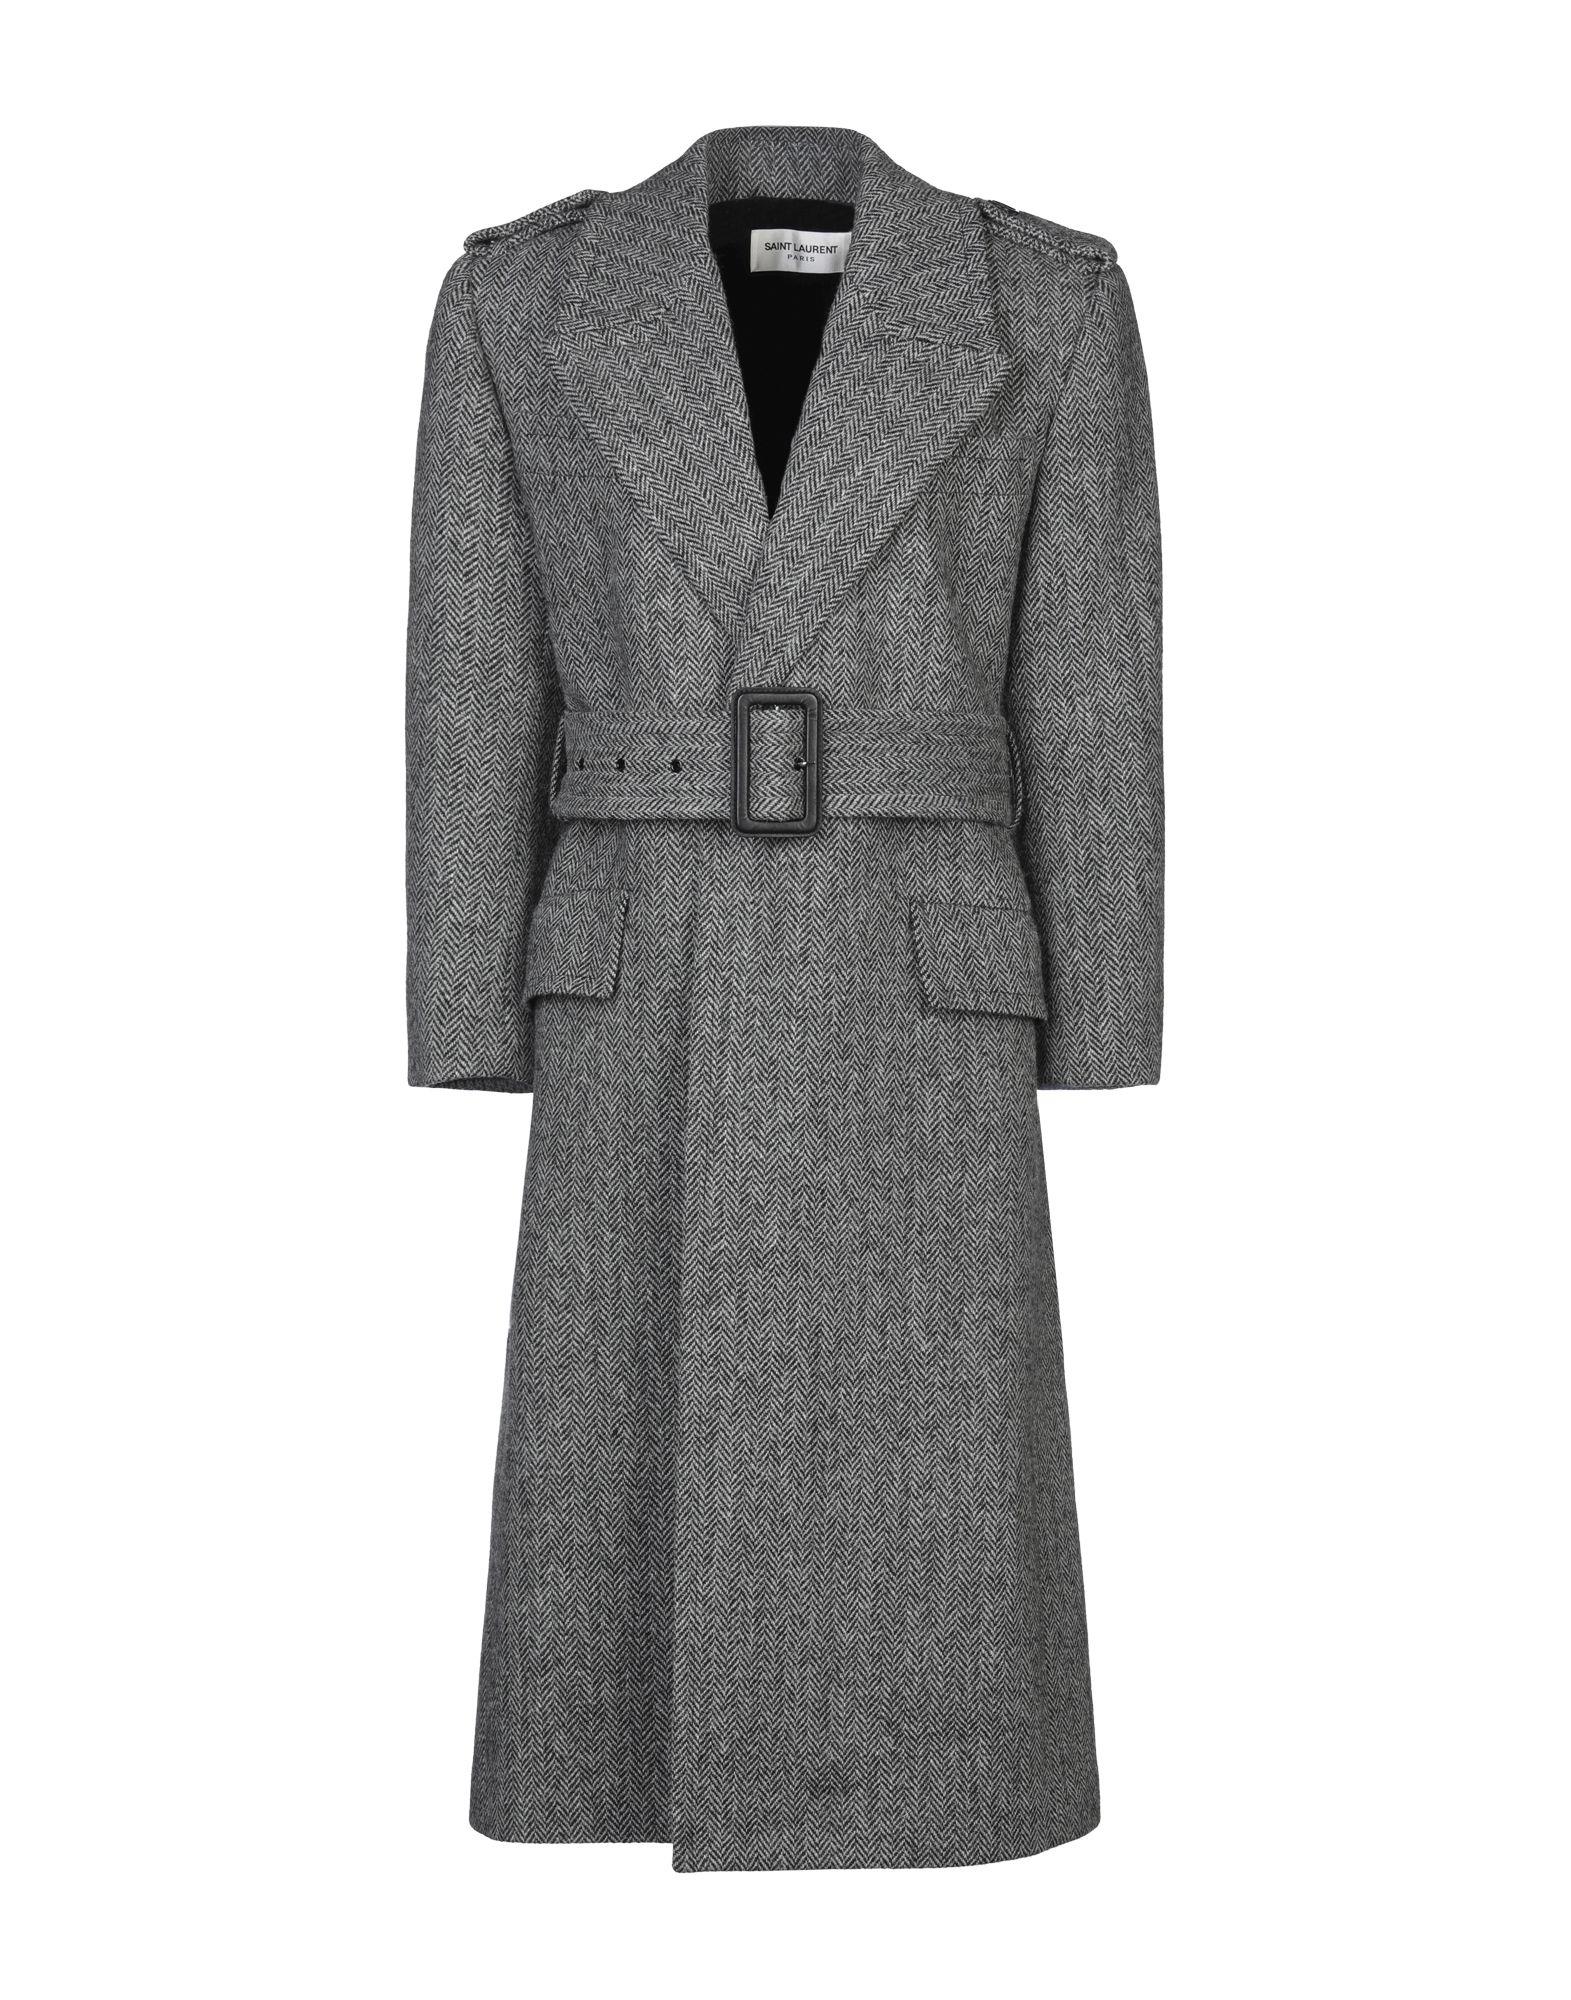 Saint Laurent Wool Coat in Black - Lyst